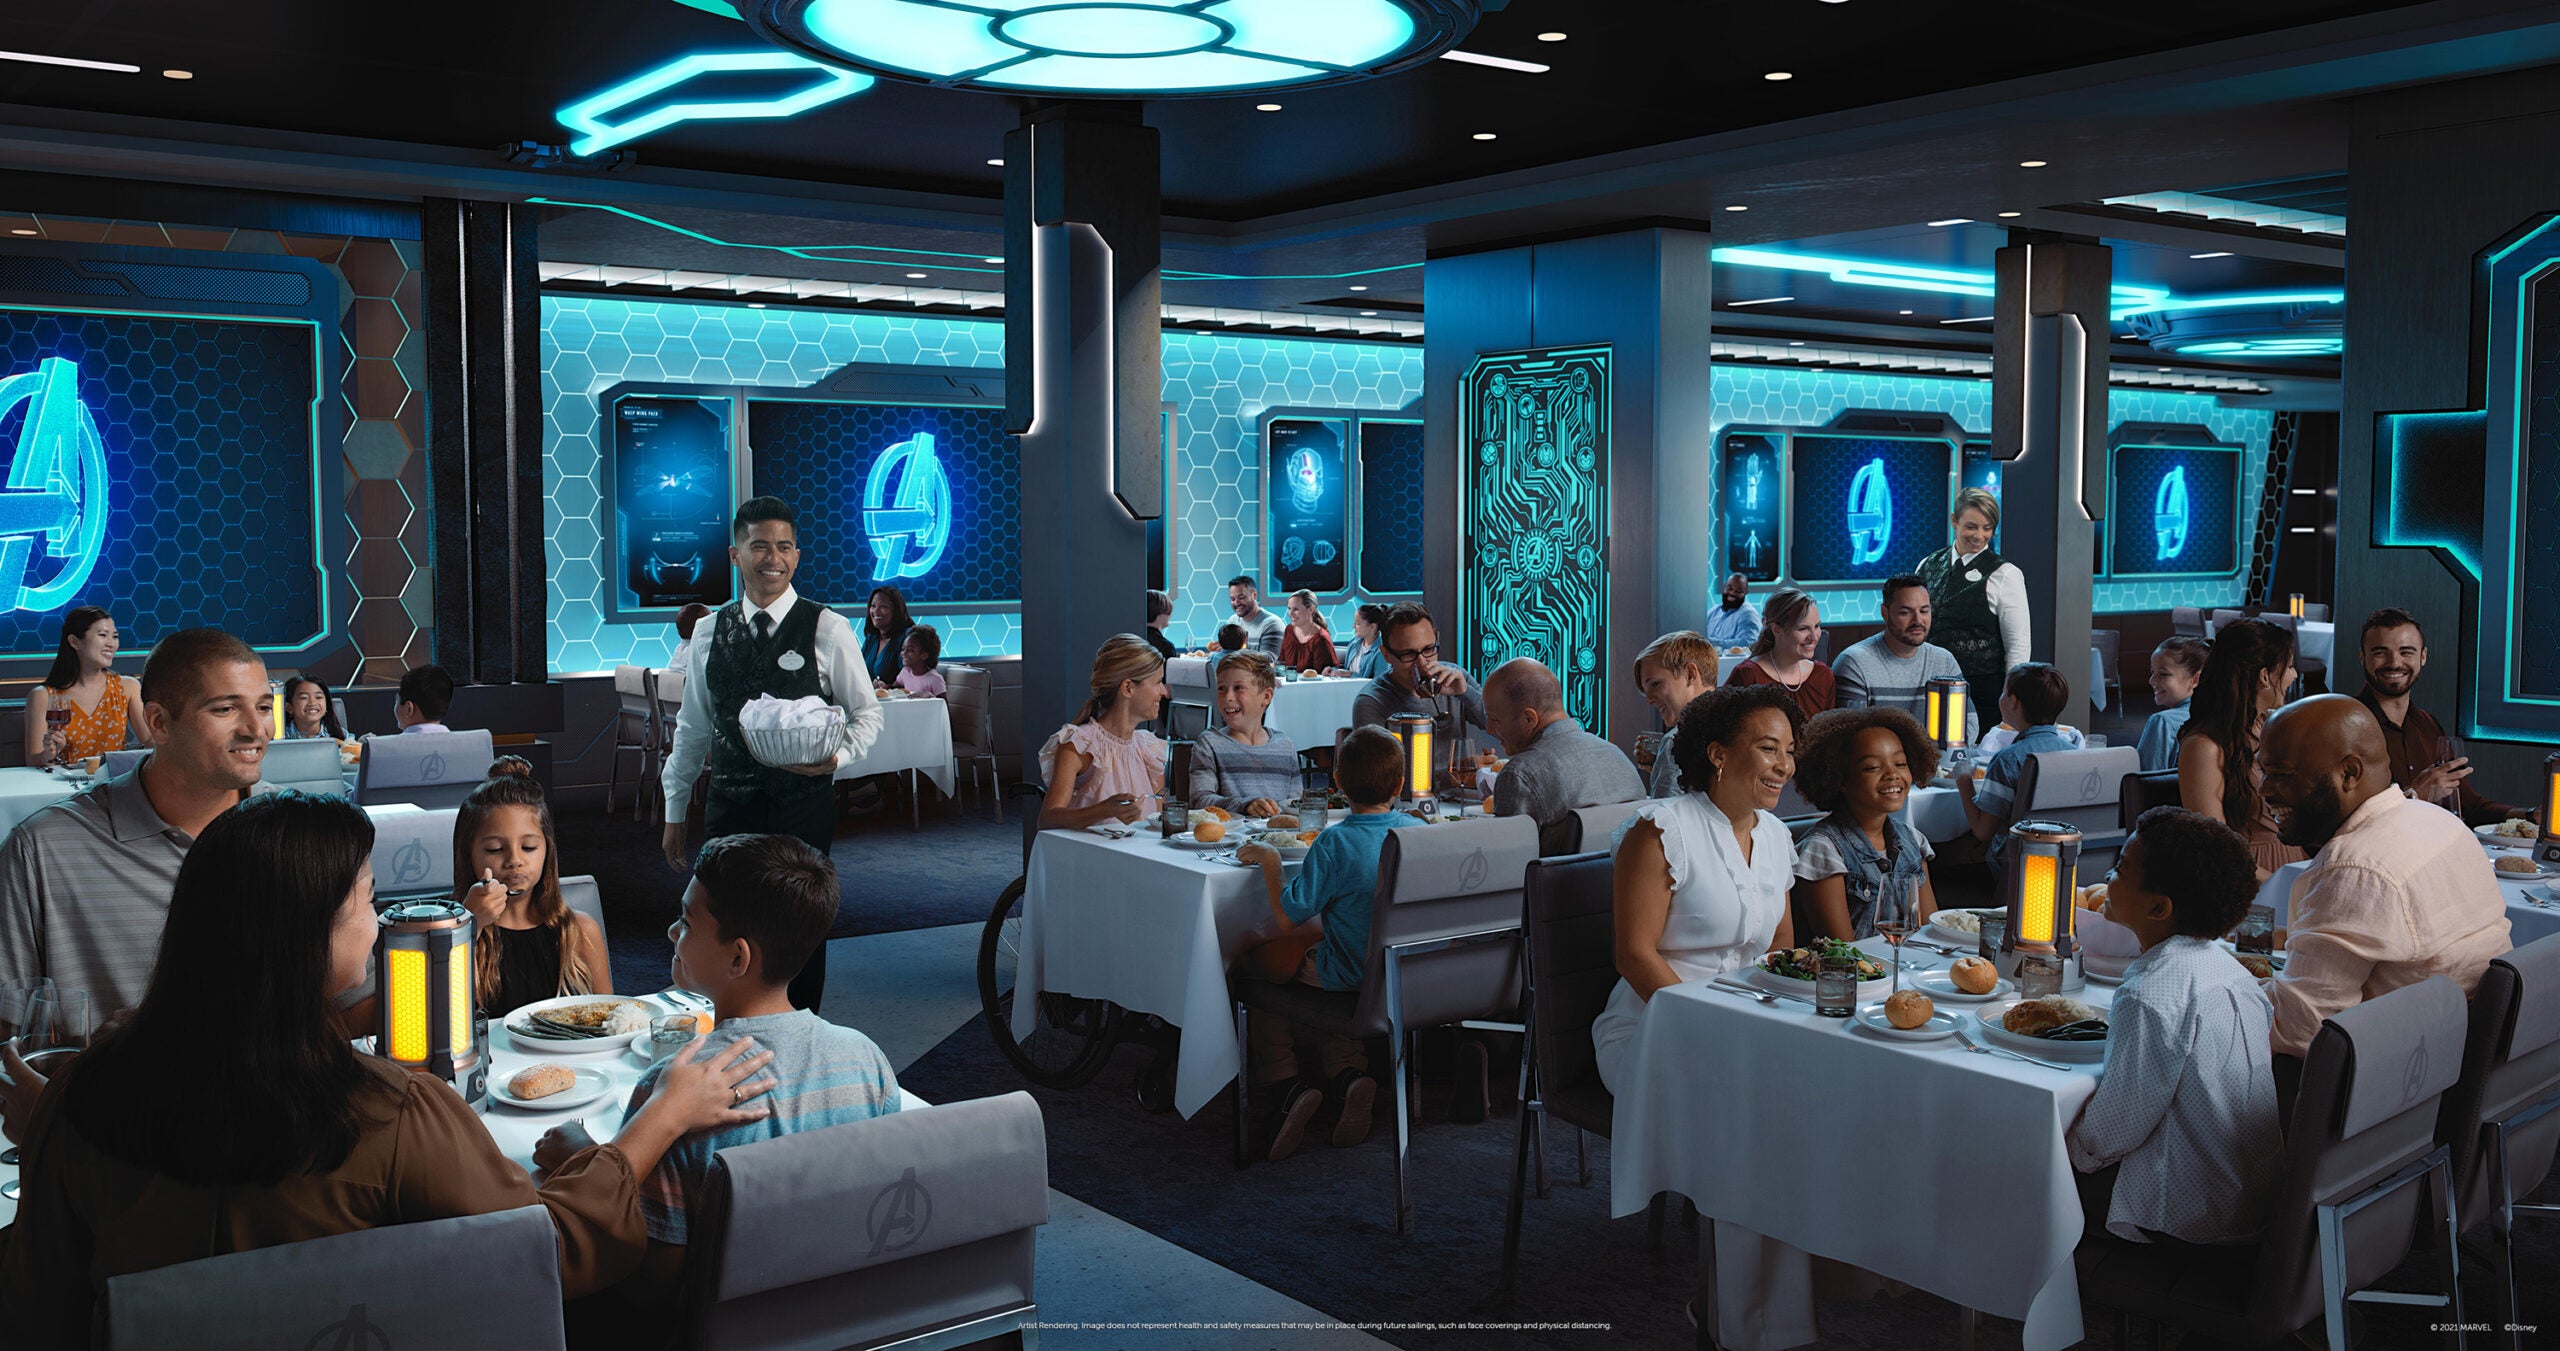 disney wish cruise ship restaurants